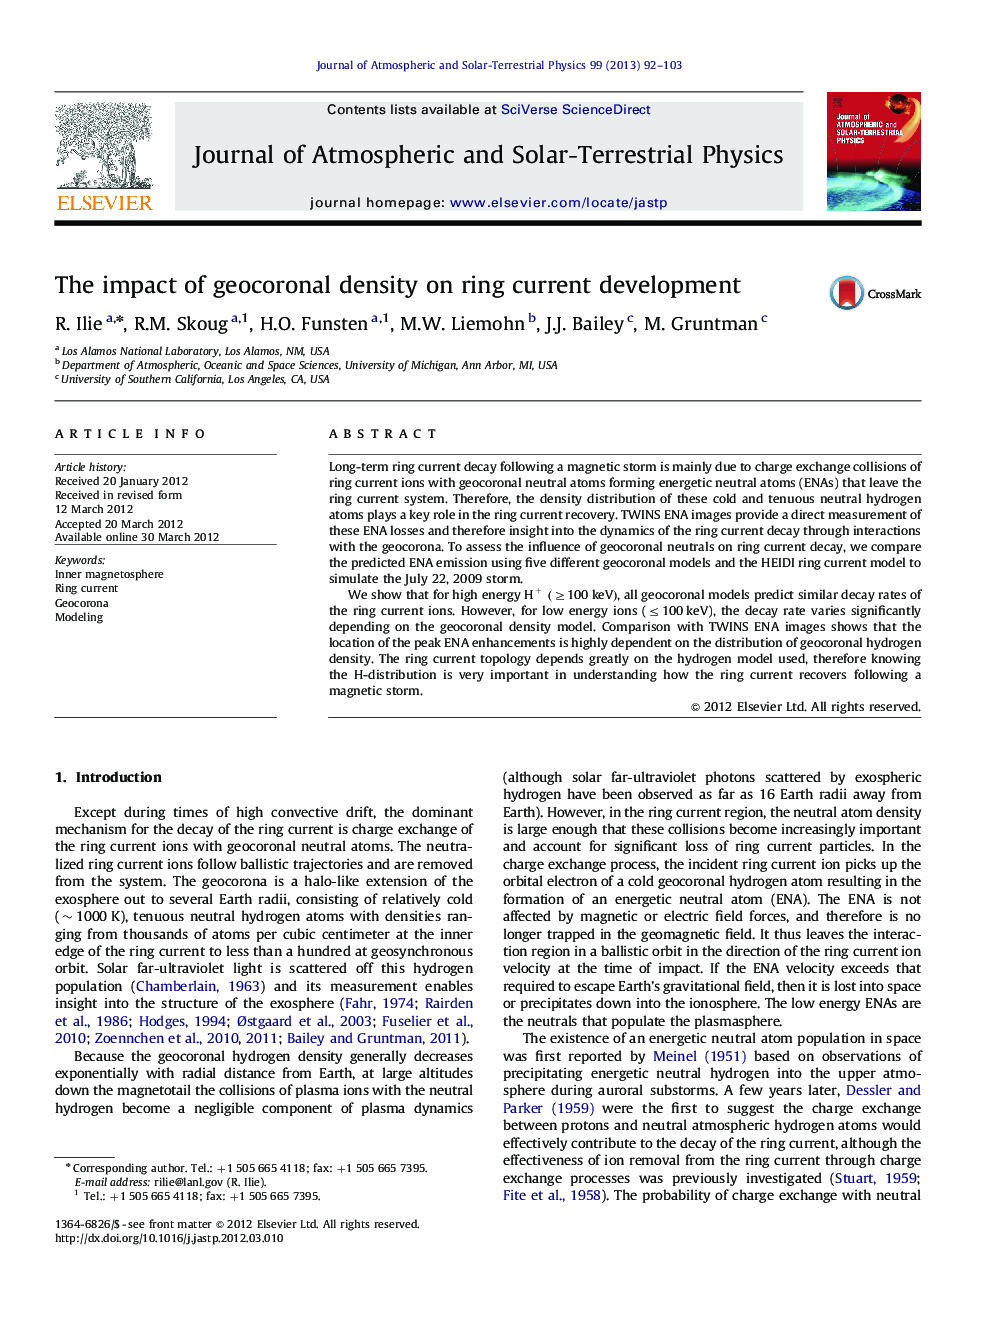 The impact of geocoronal density on ring current development